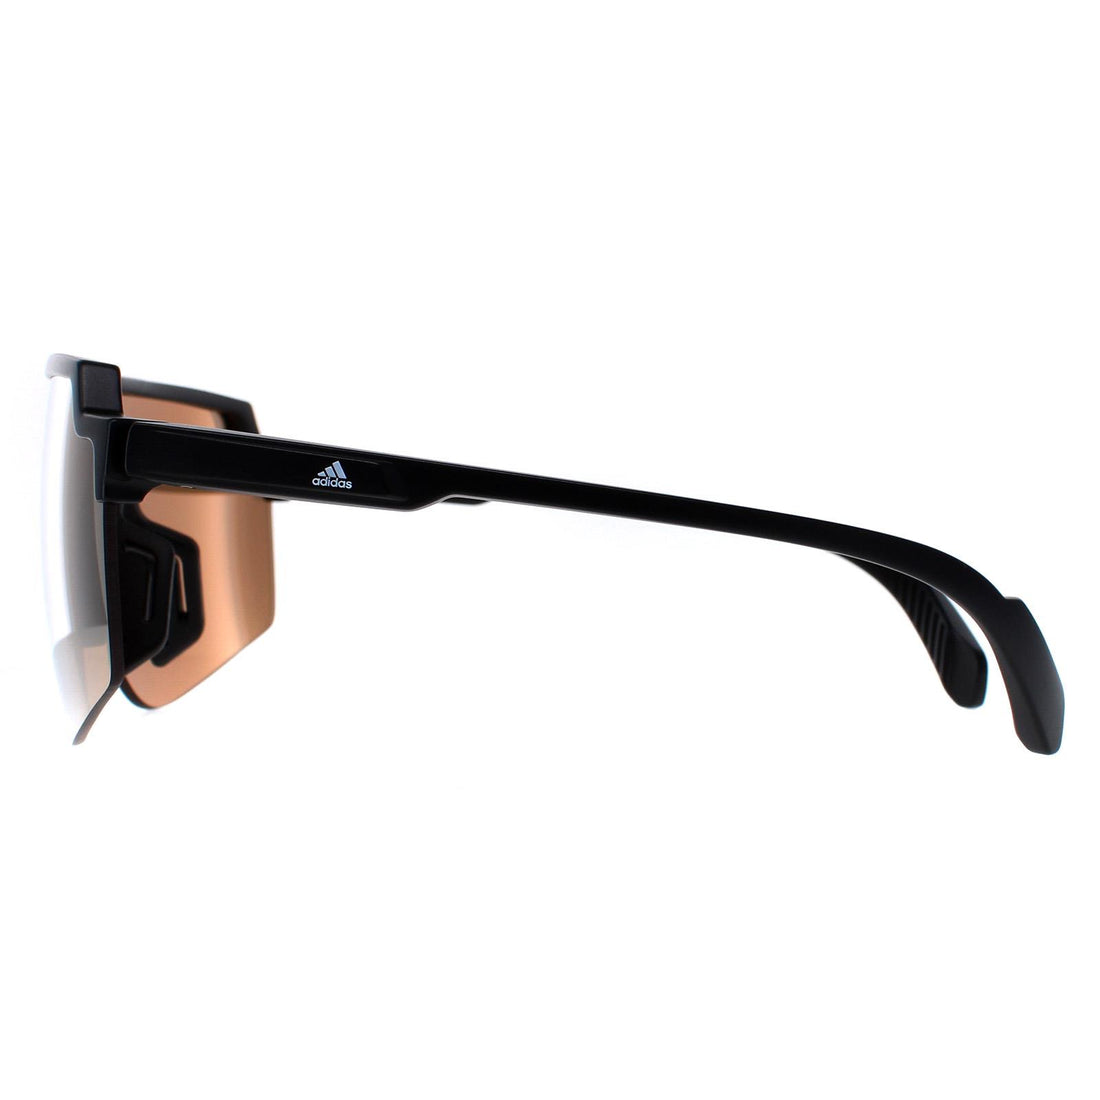 Adidas SP0018 Sunglasses